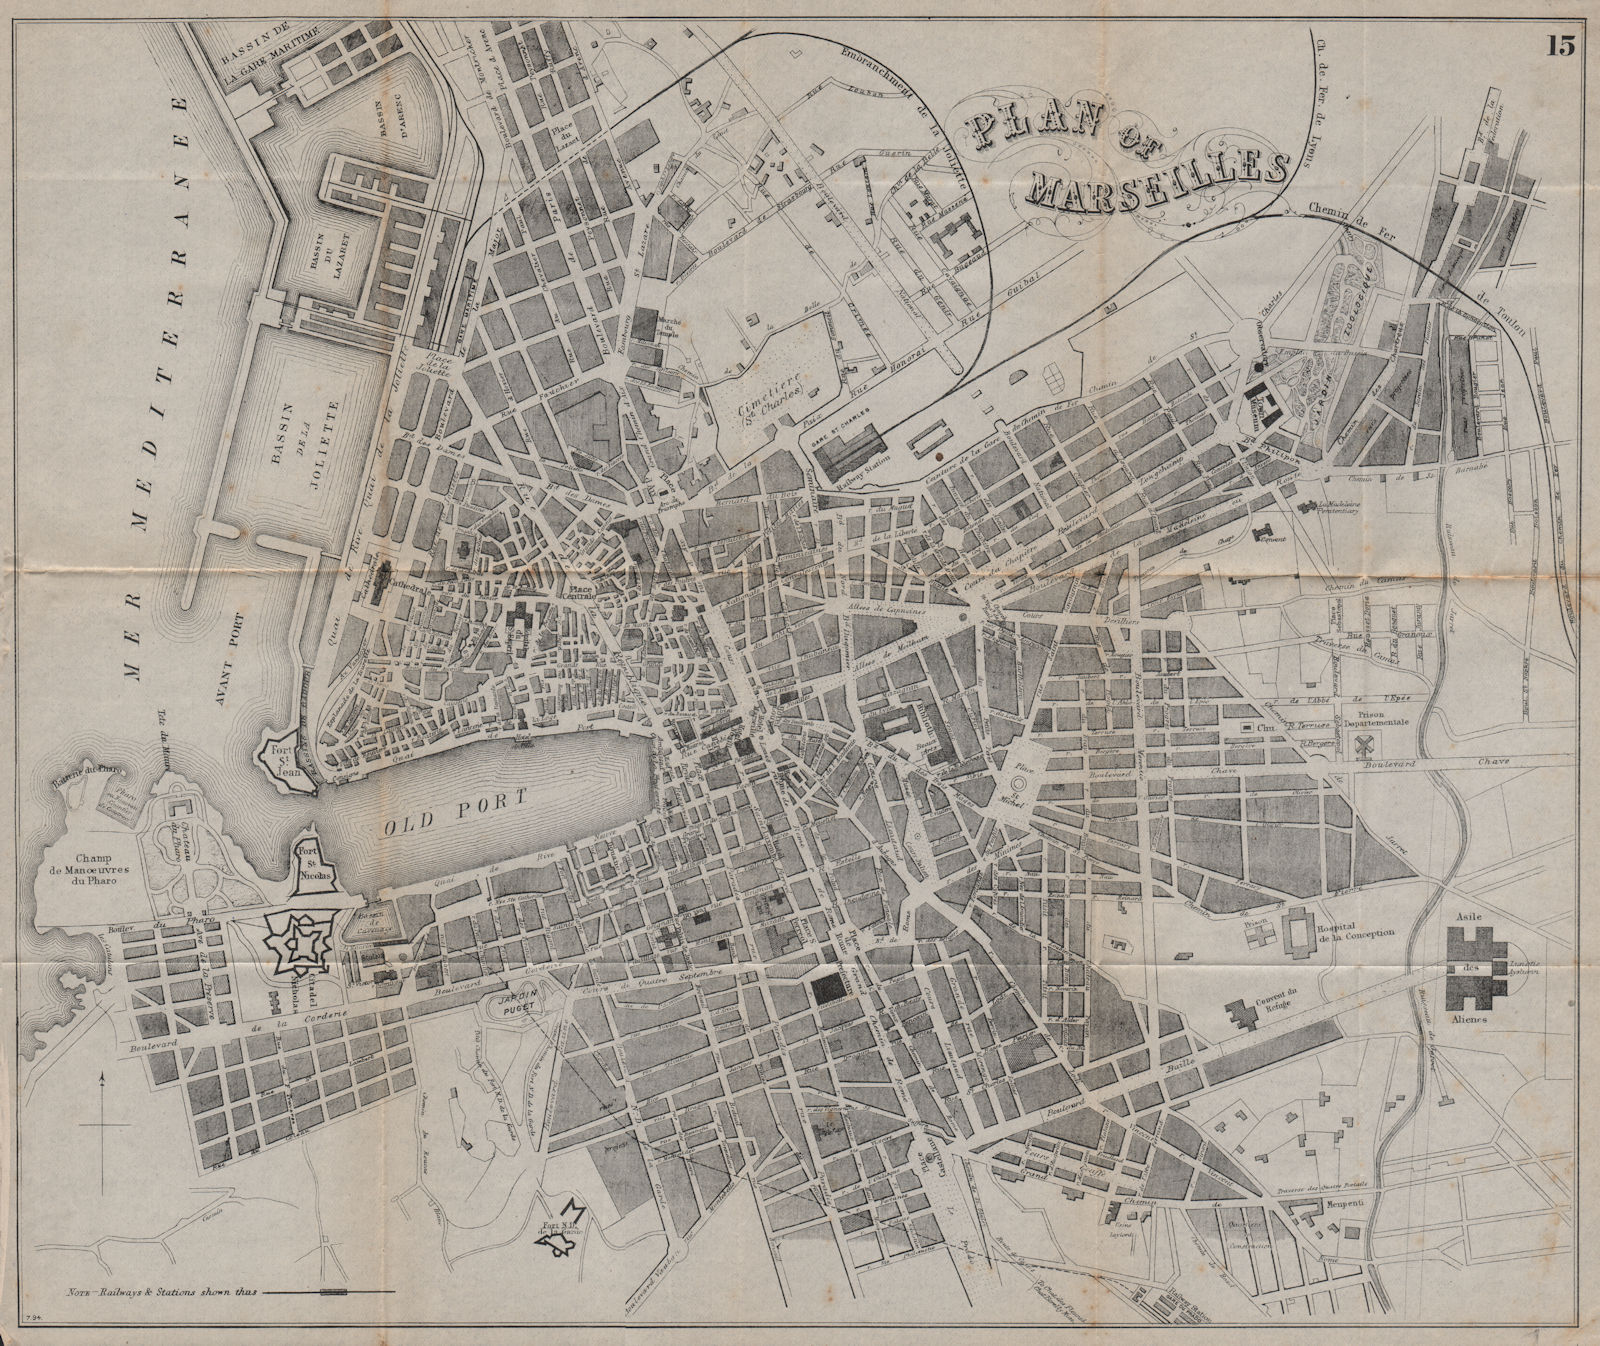 MARSEILLES. Antique town plan. City map. France. BRADSHAW 1895 old